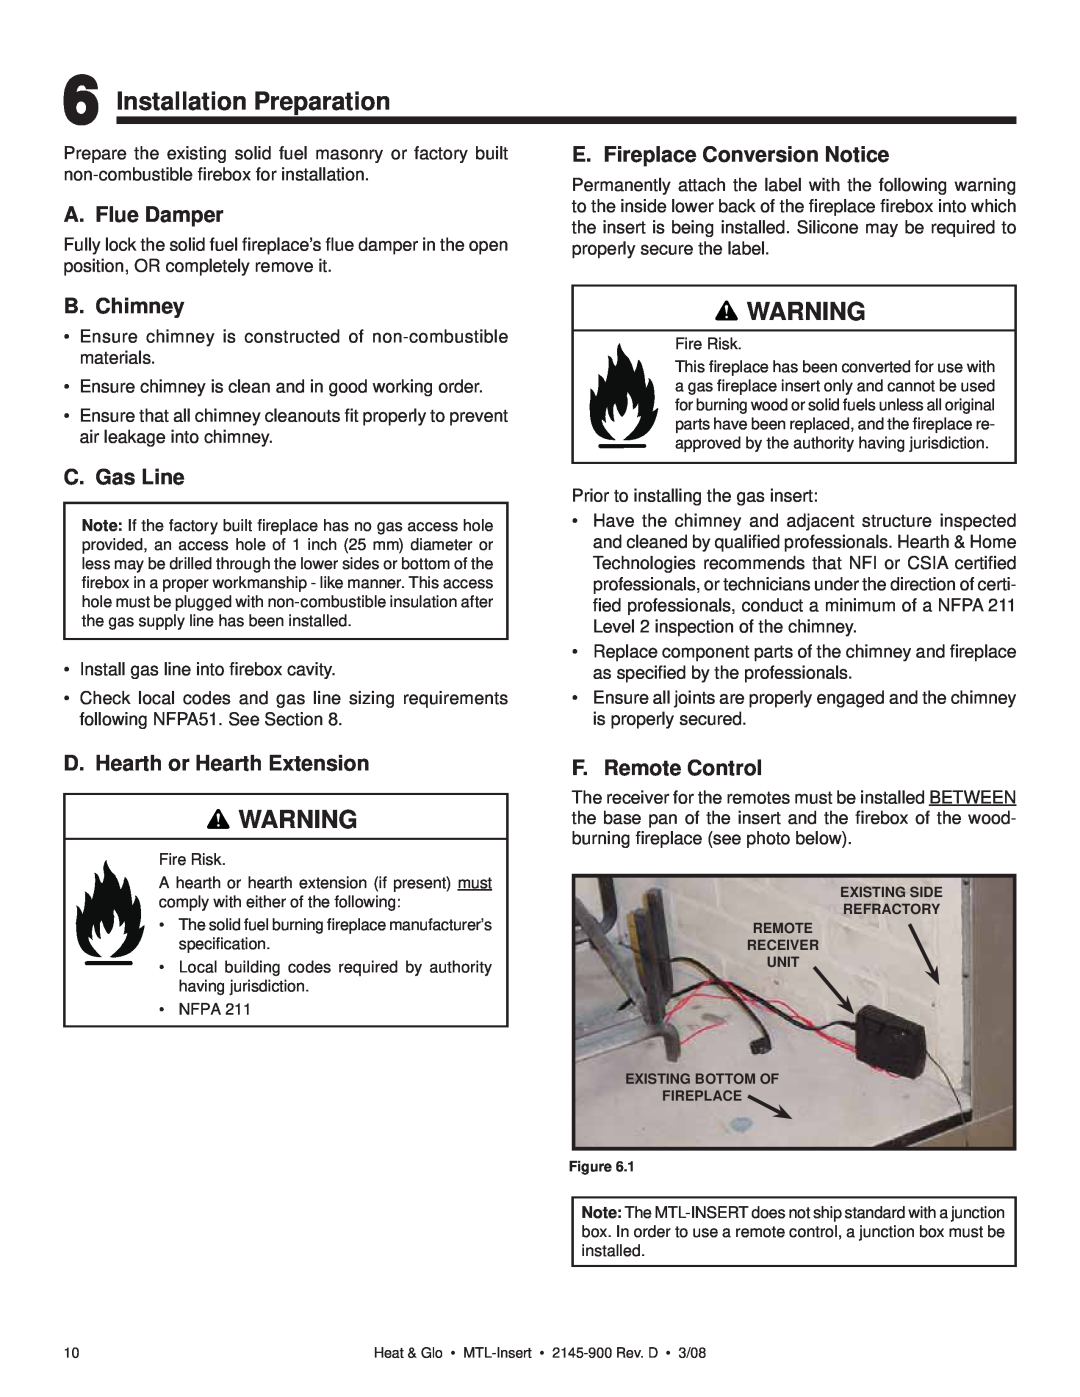 Heat & Glo LifeStyle MTL-INSERT Installation Preparation, A. Flue Damper, E. Fireplace Conversion Notice, B. Chimney 